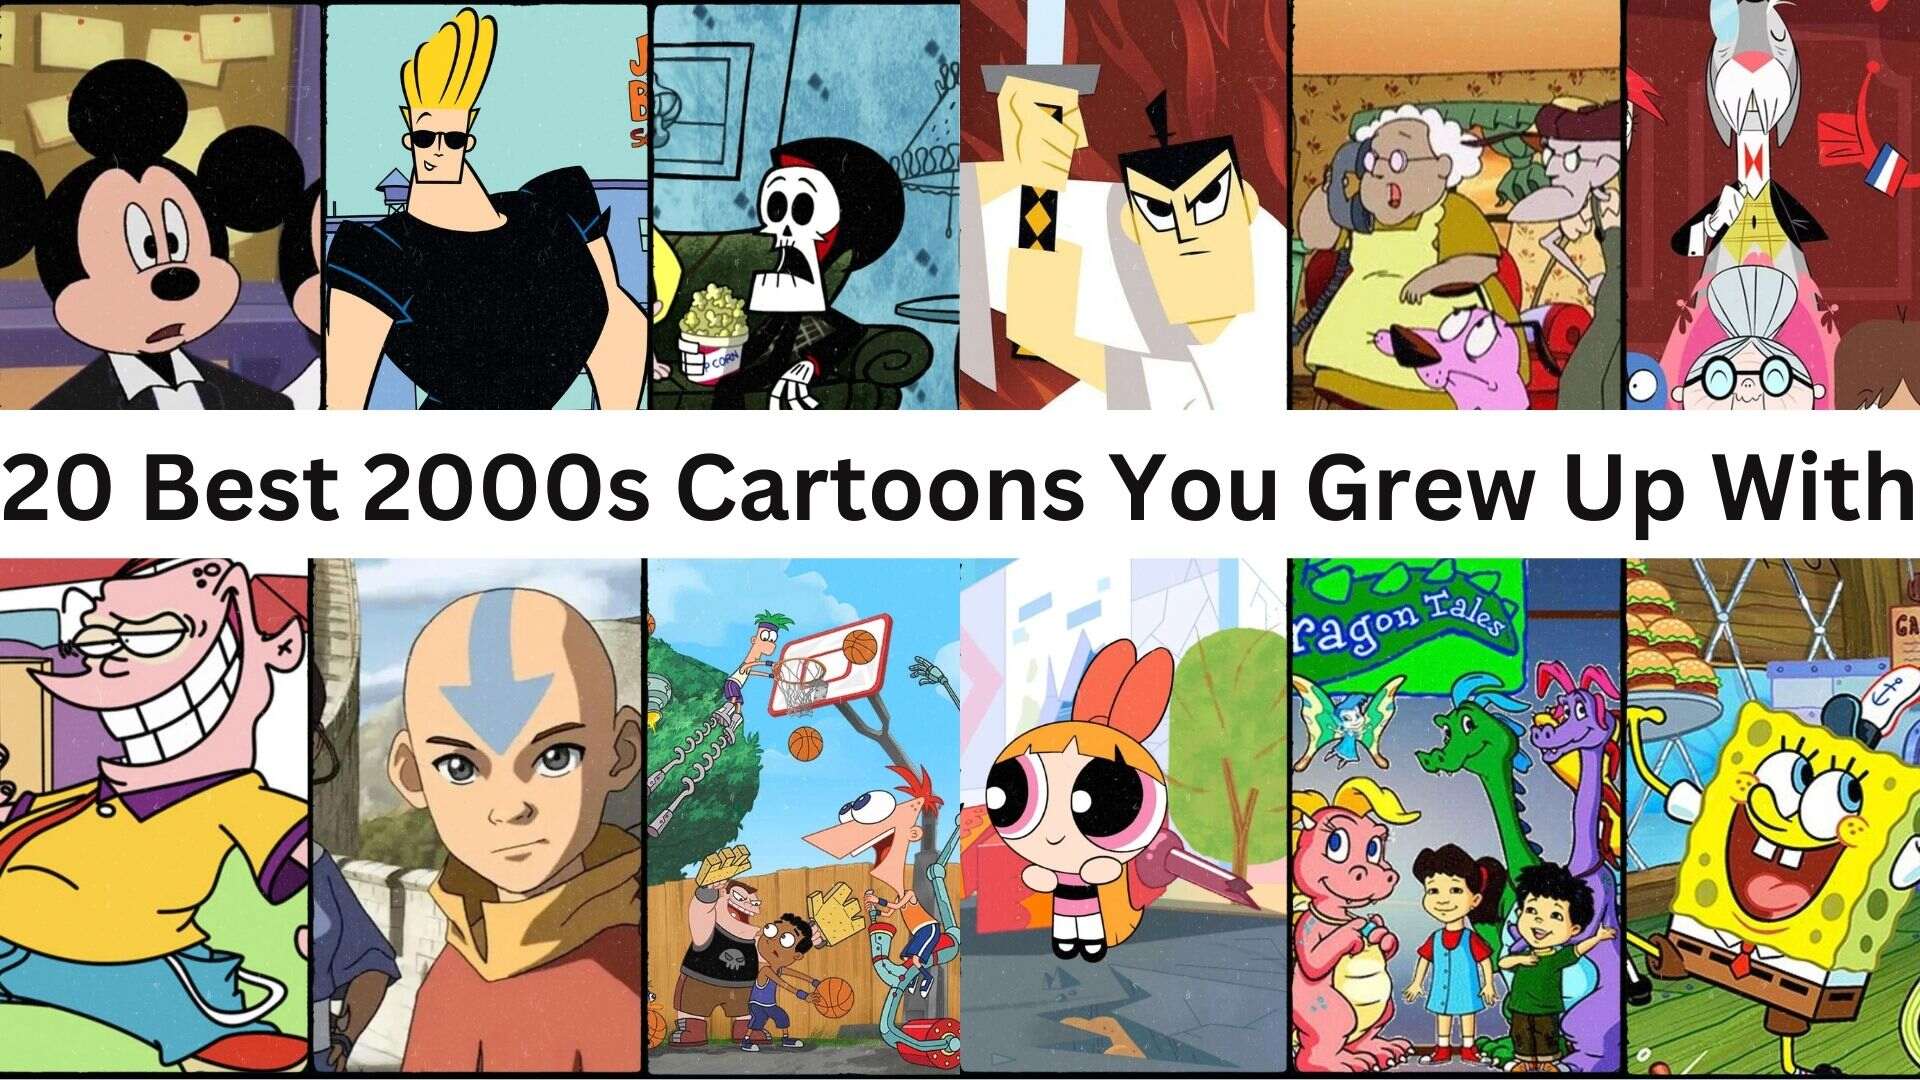 20 Best 2000s Cartoons You Grew Up With - OtakuKart